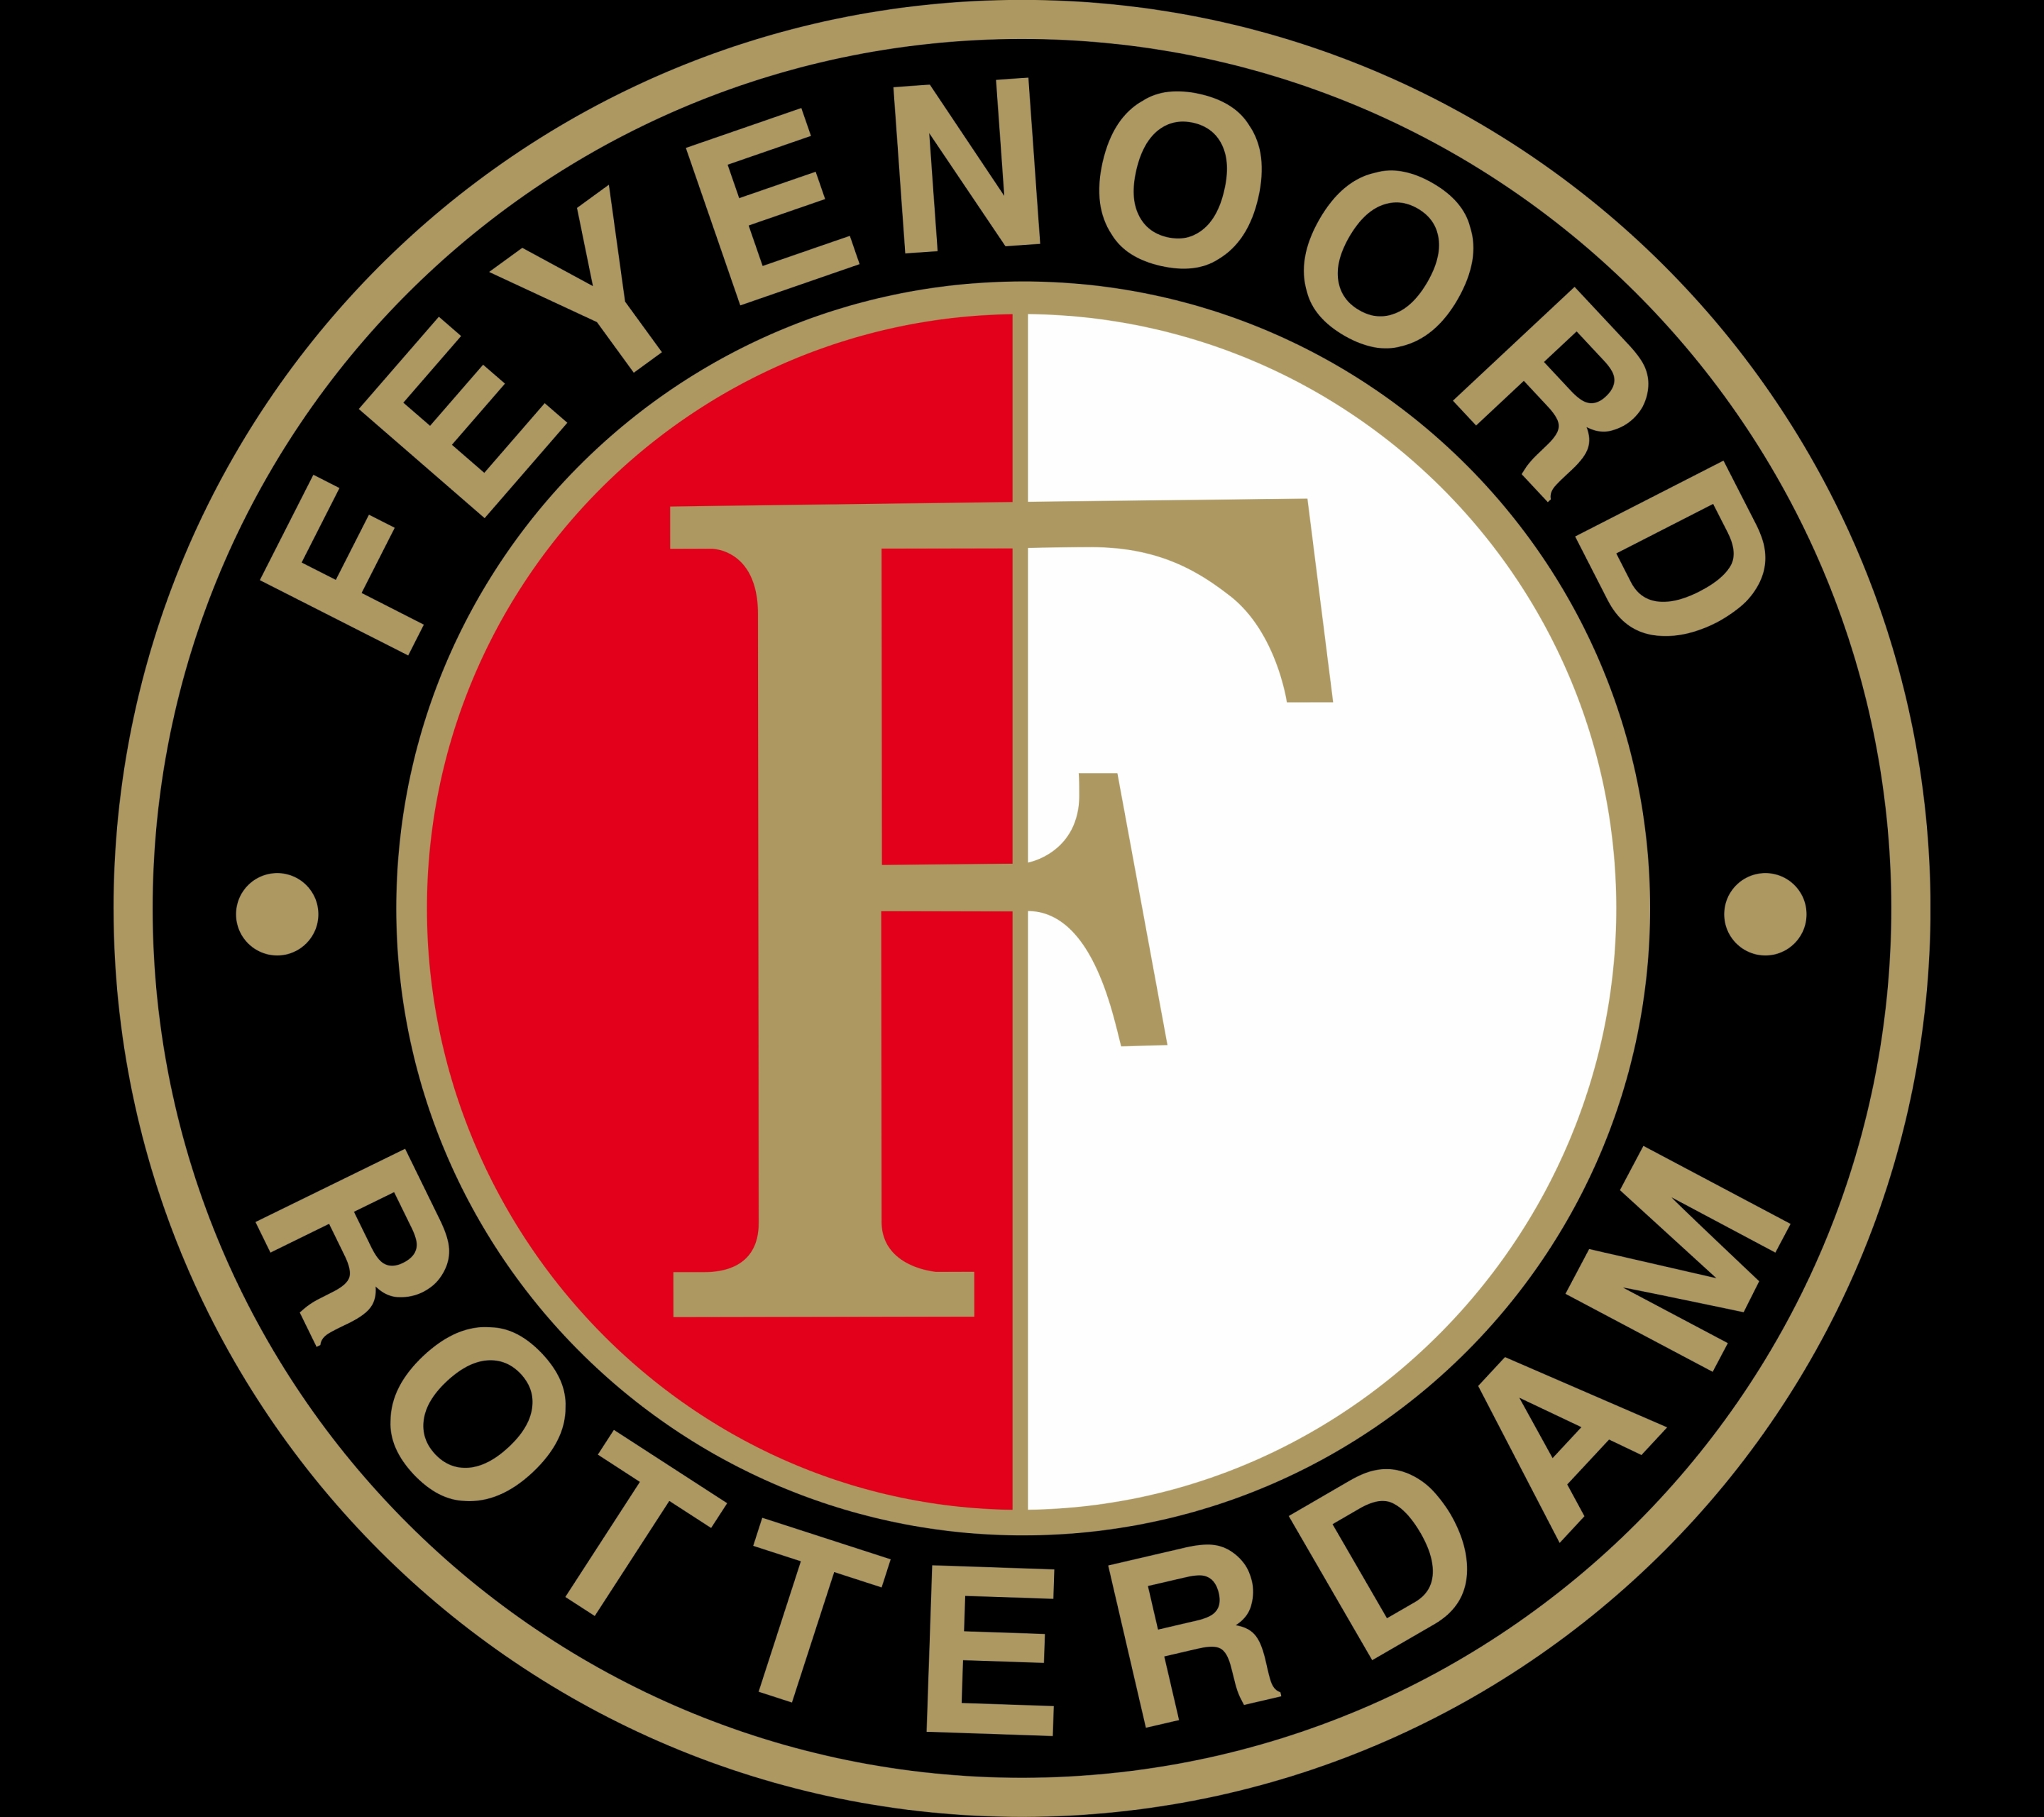 Baixar papel de parede para celular de Esportes, Futebol, Feyenoord gratuito.